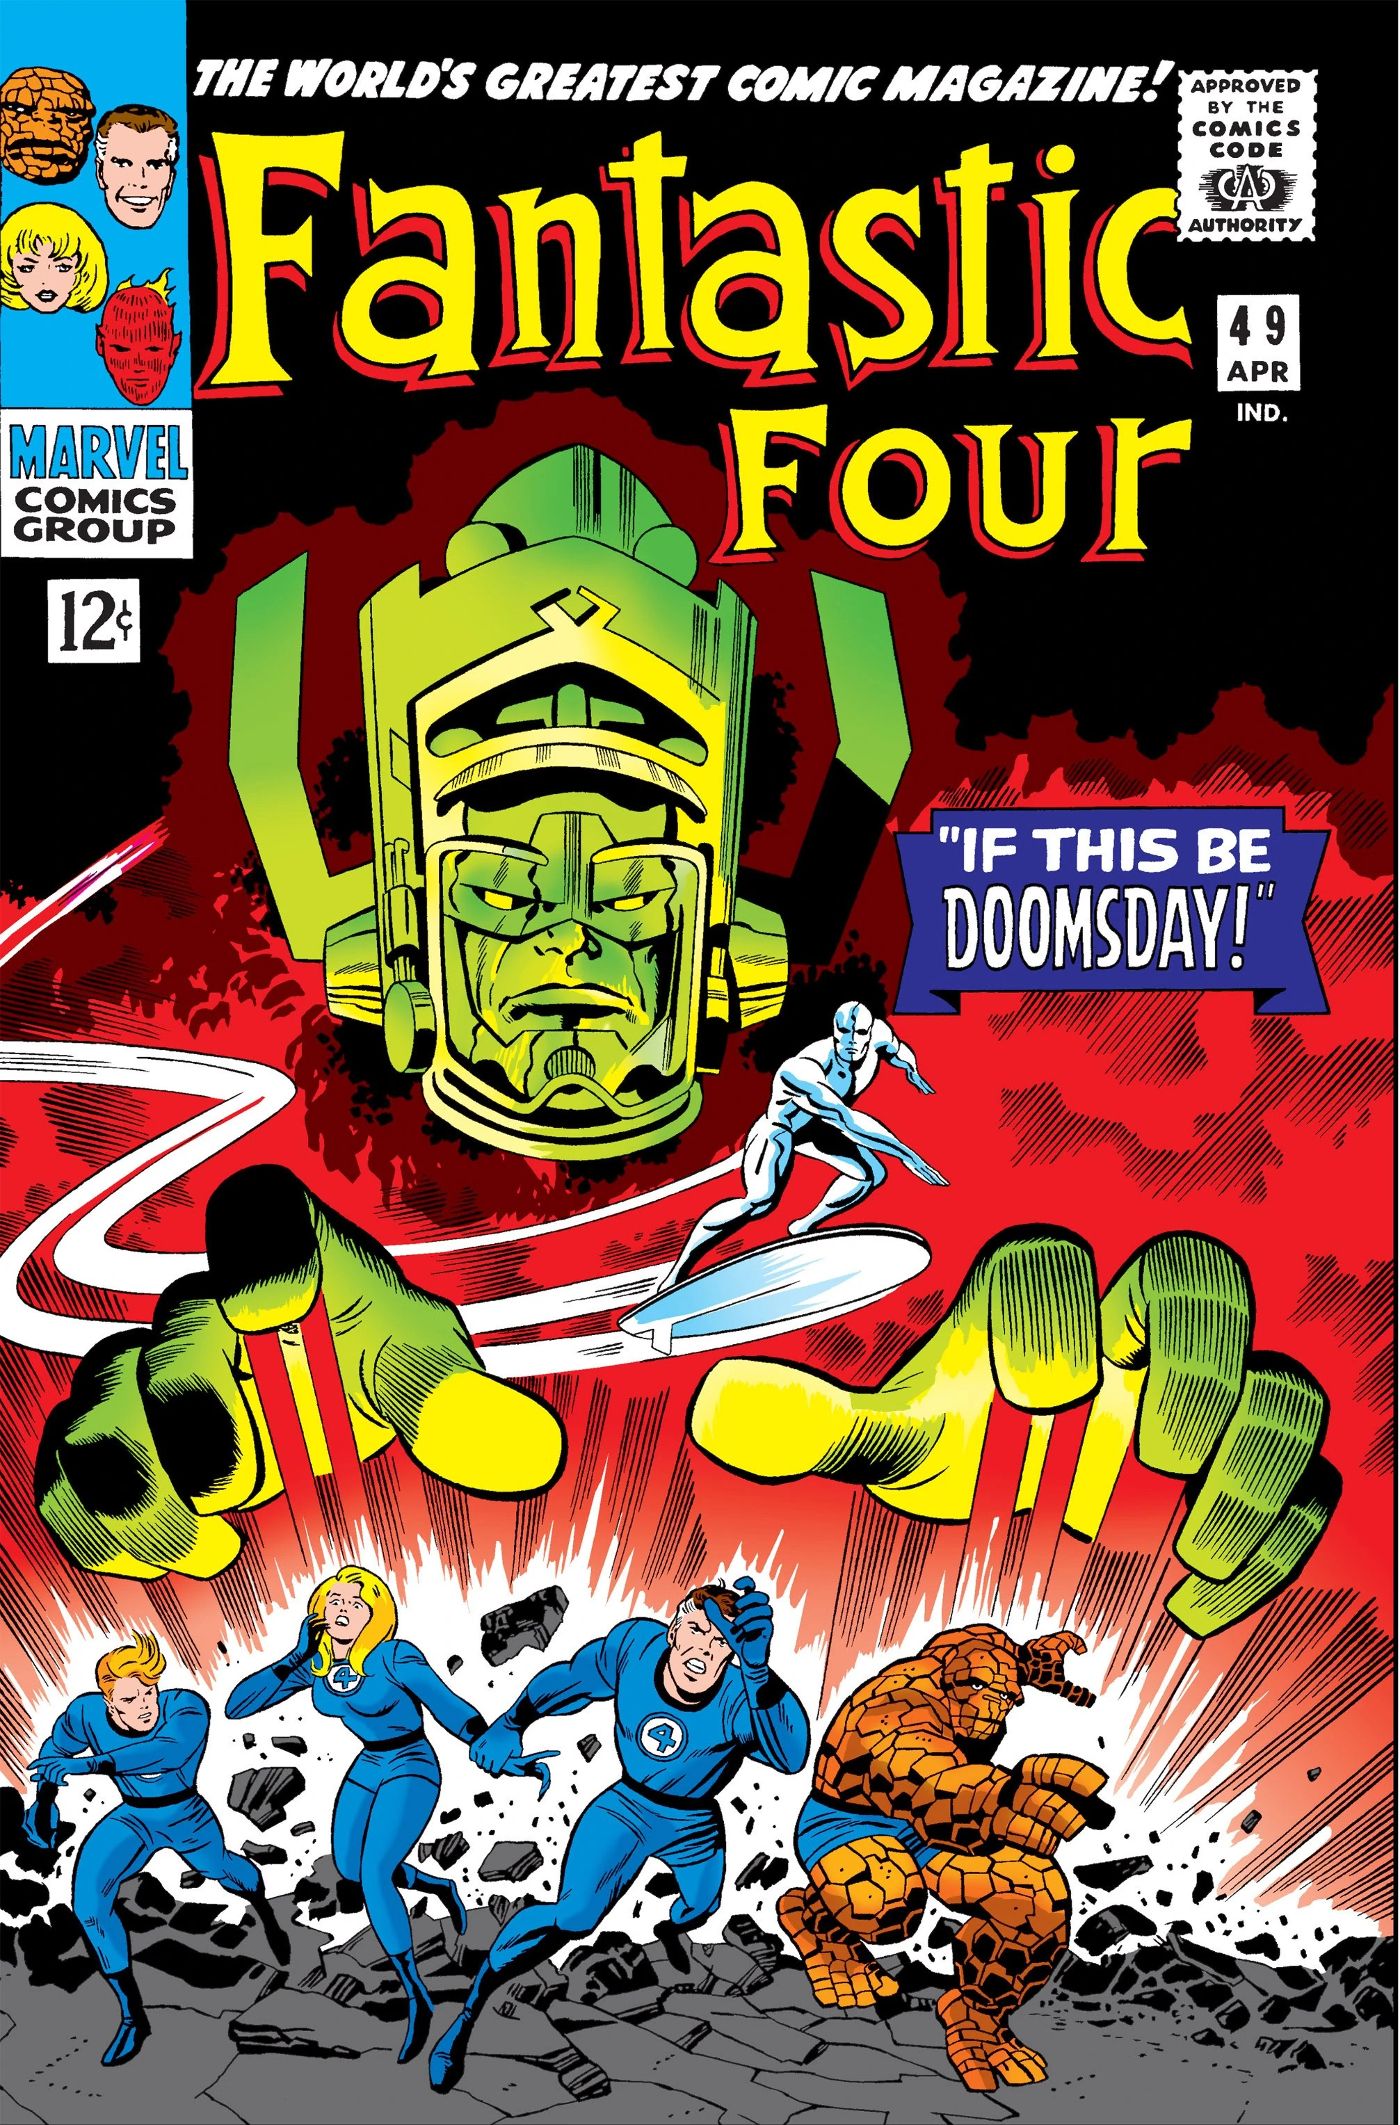 Fantastic-Four-vol-1-49-Galactus-trilogy-chegada